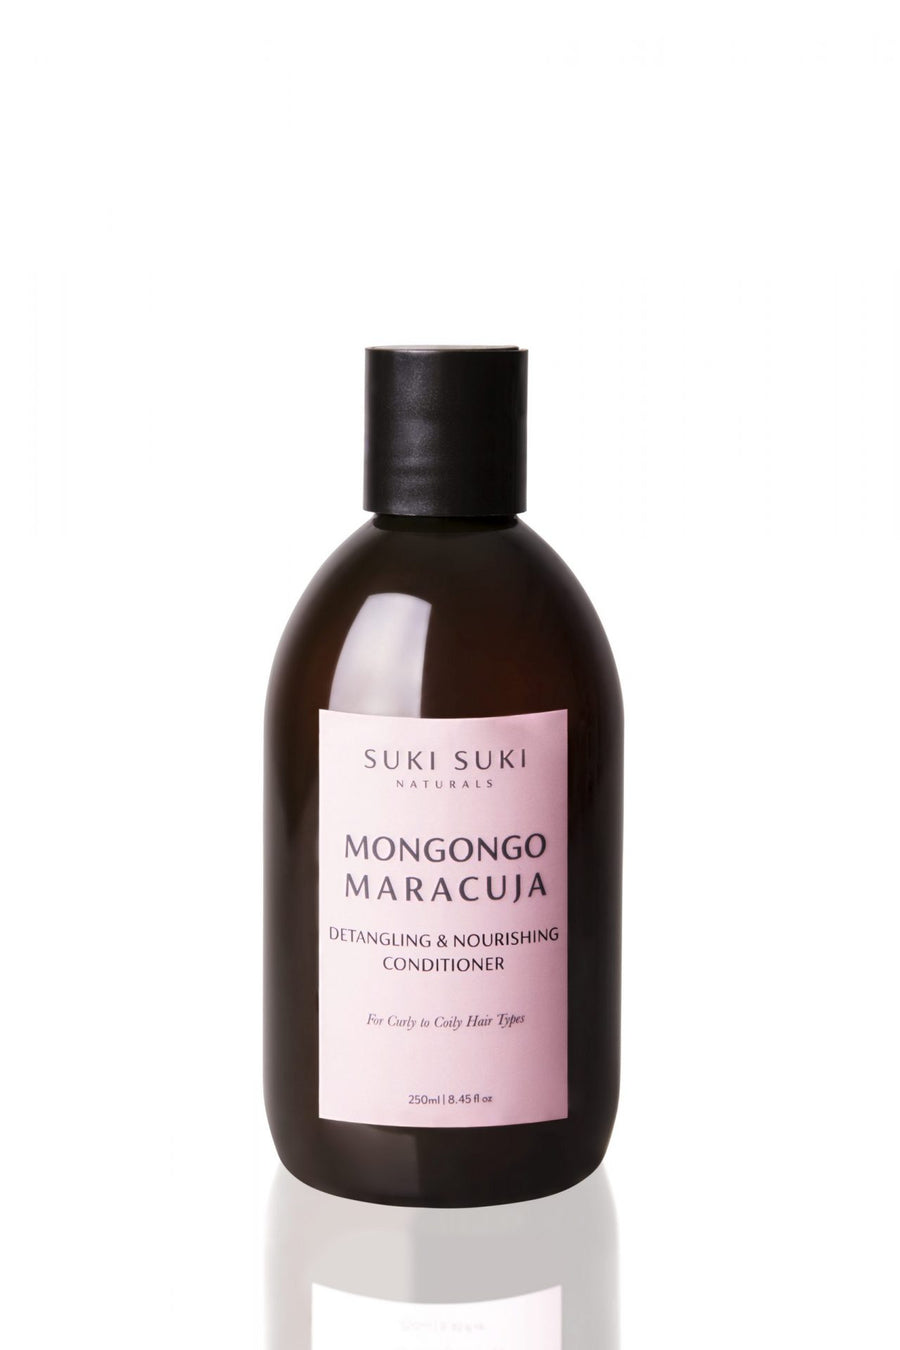 Mongongo Maracuja Detangling & Nourishing Conditioner.